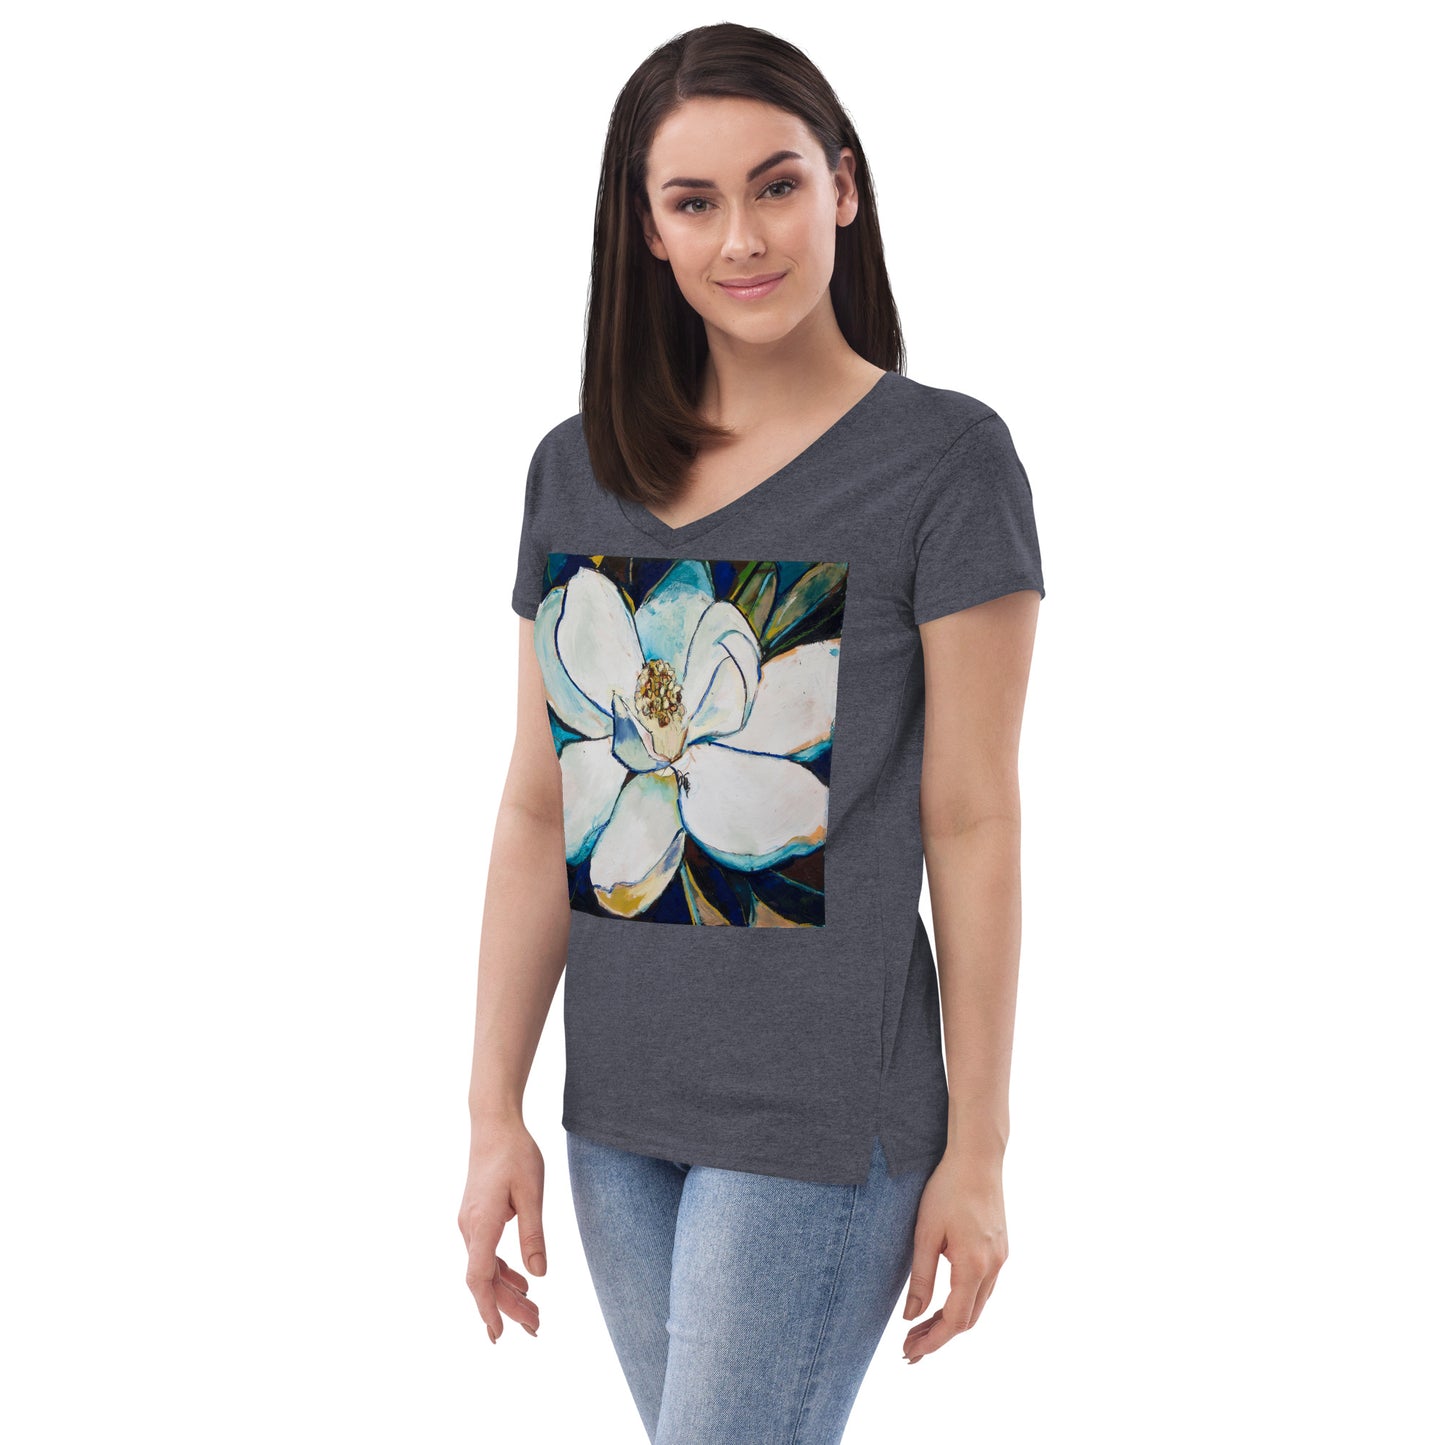 Indigo Magnolia Women’s recycled v-neck t-shirt